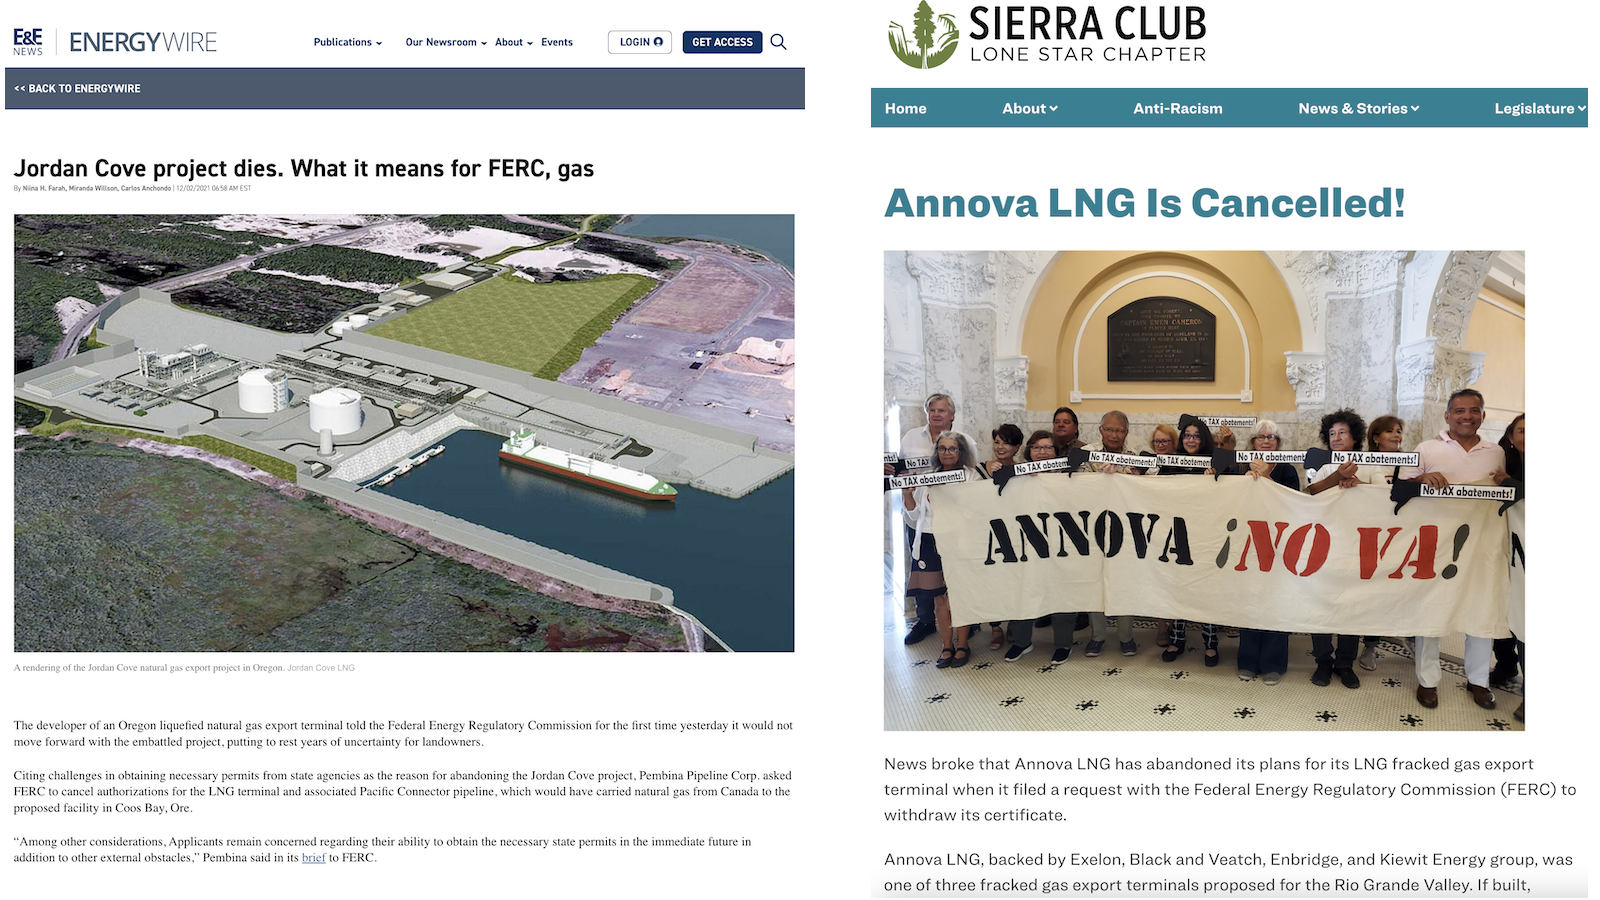 Anti-LNG movement